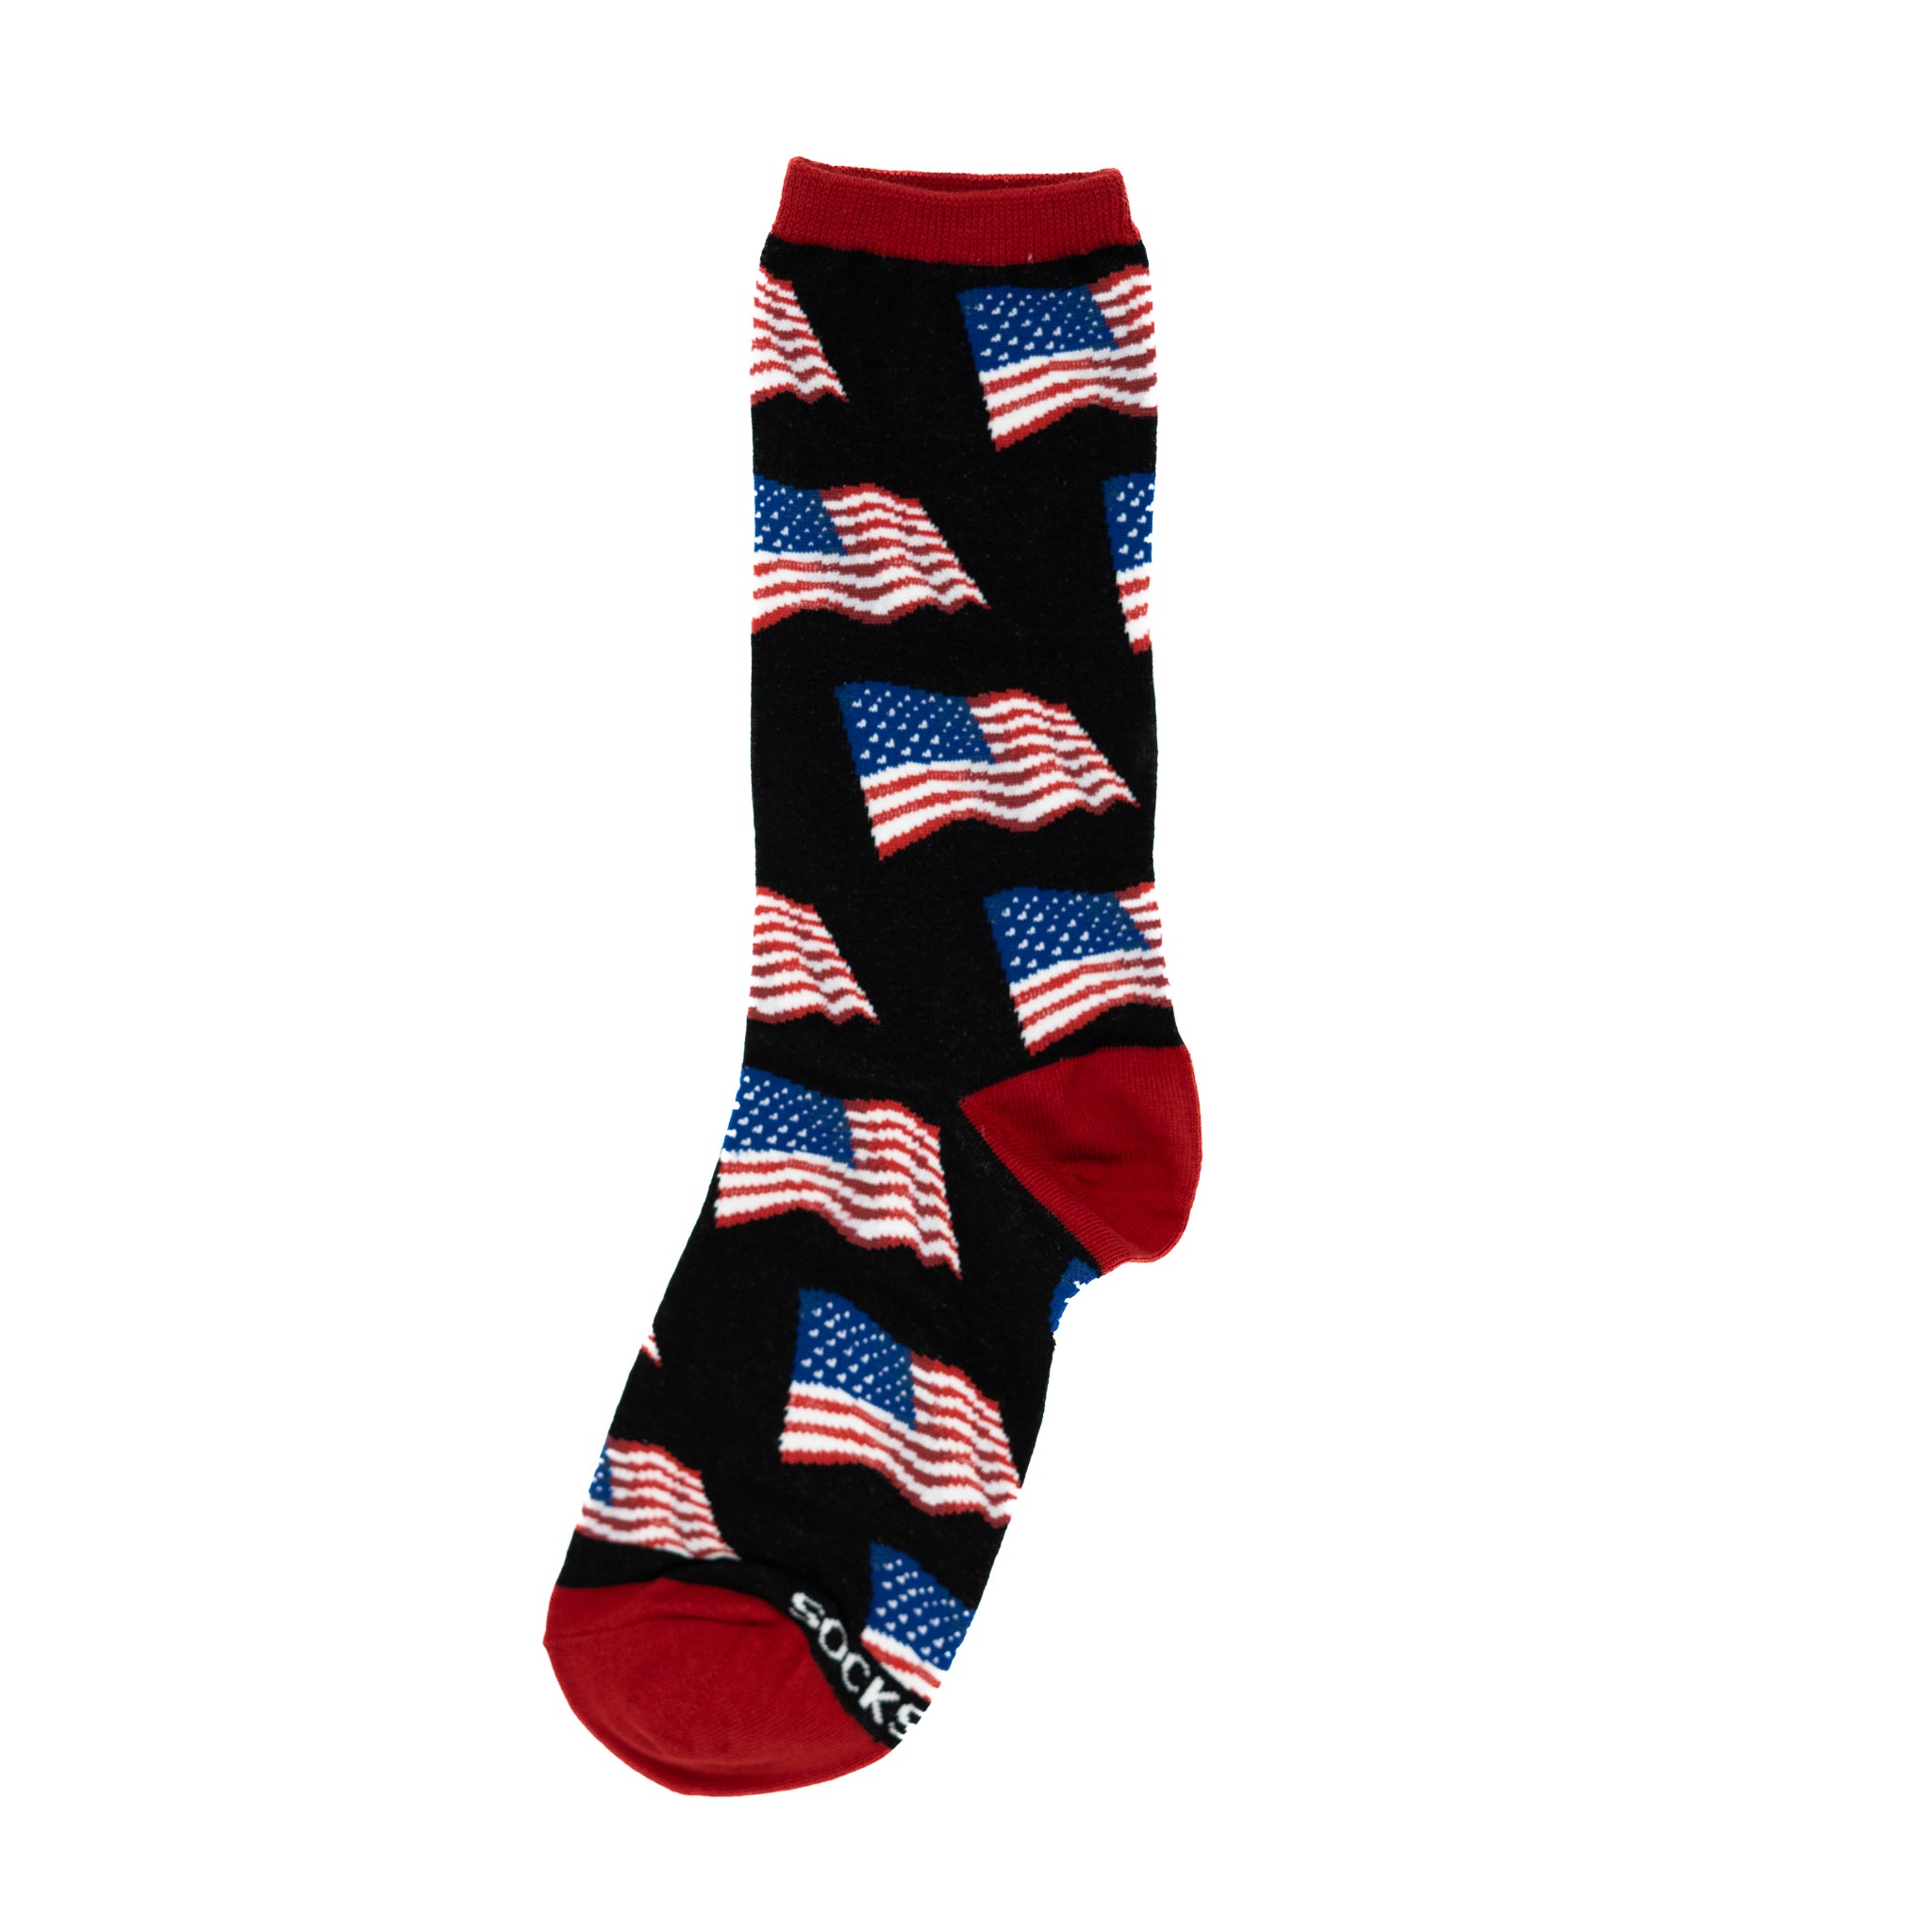 "Old Glory" American Socks